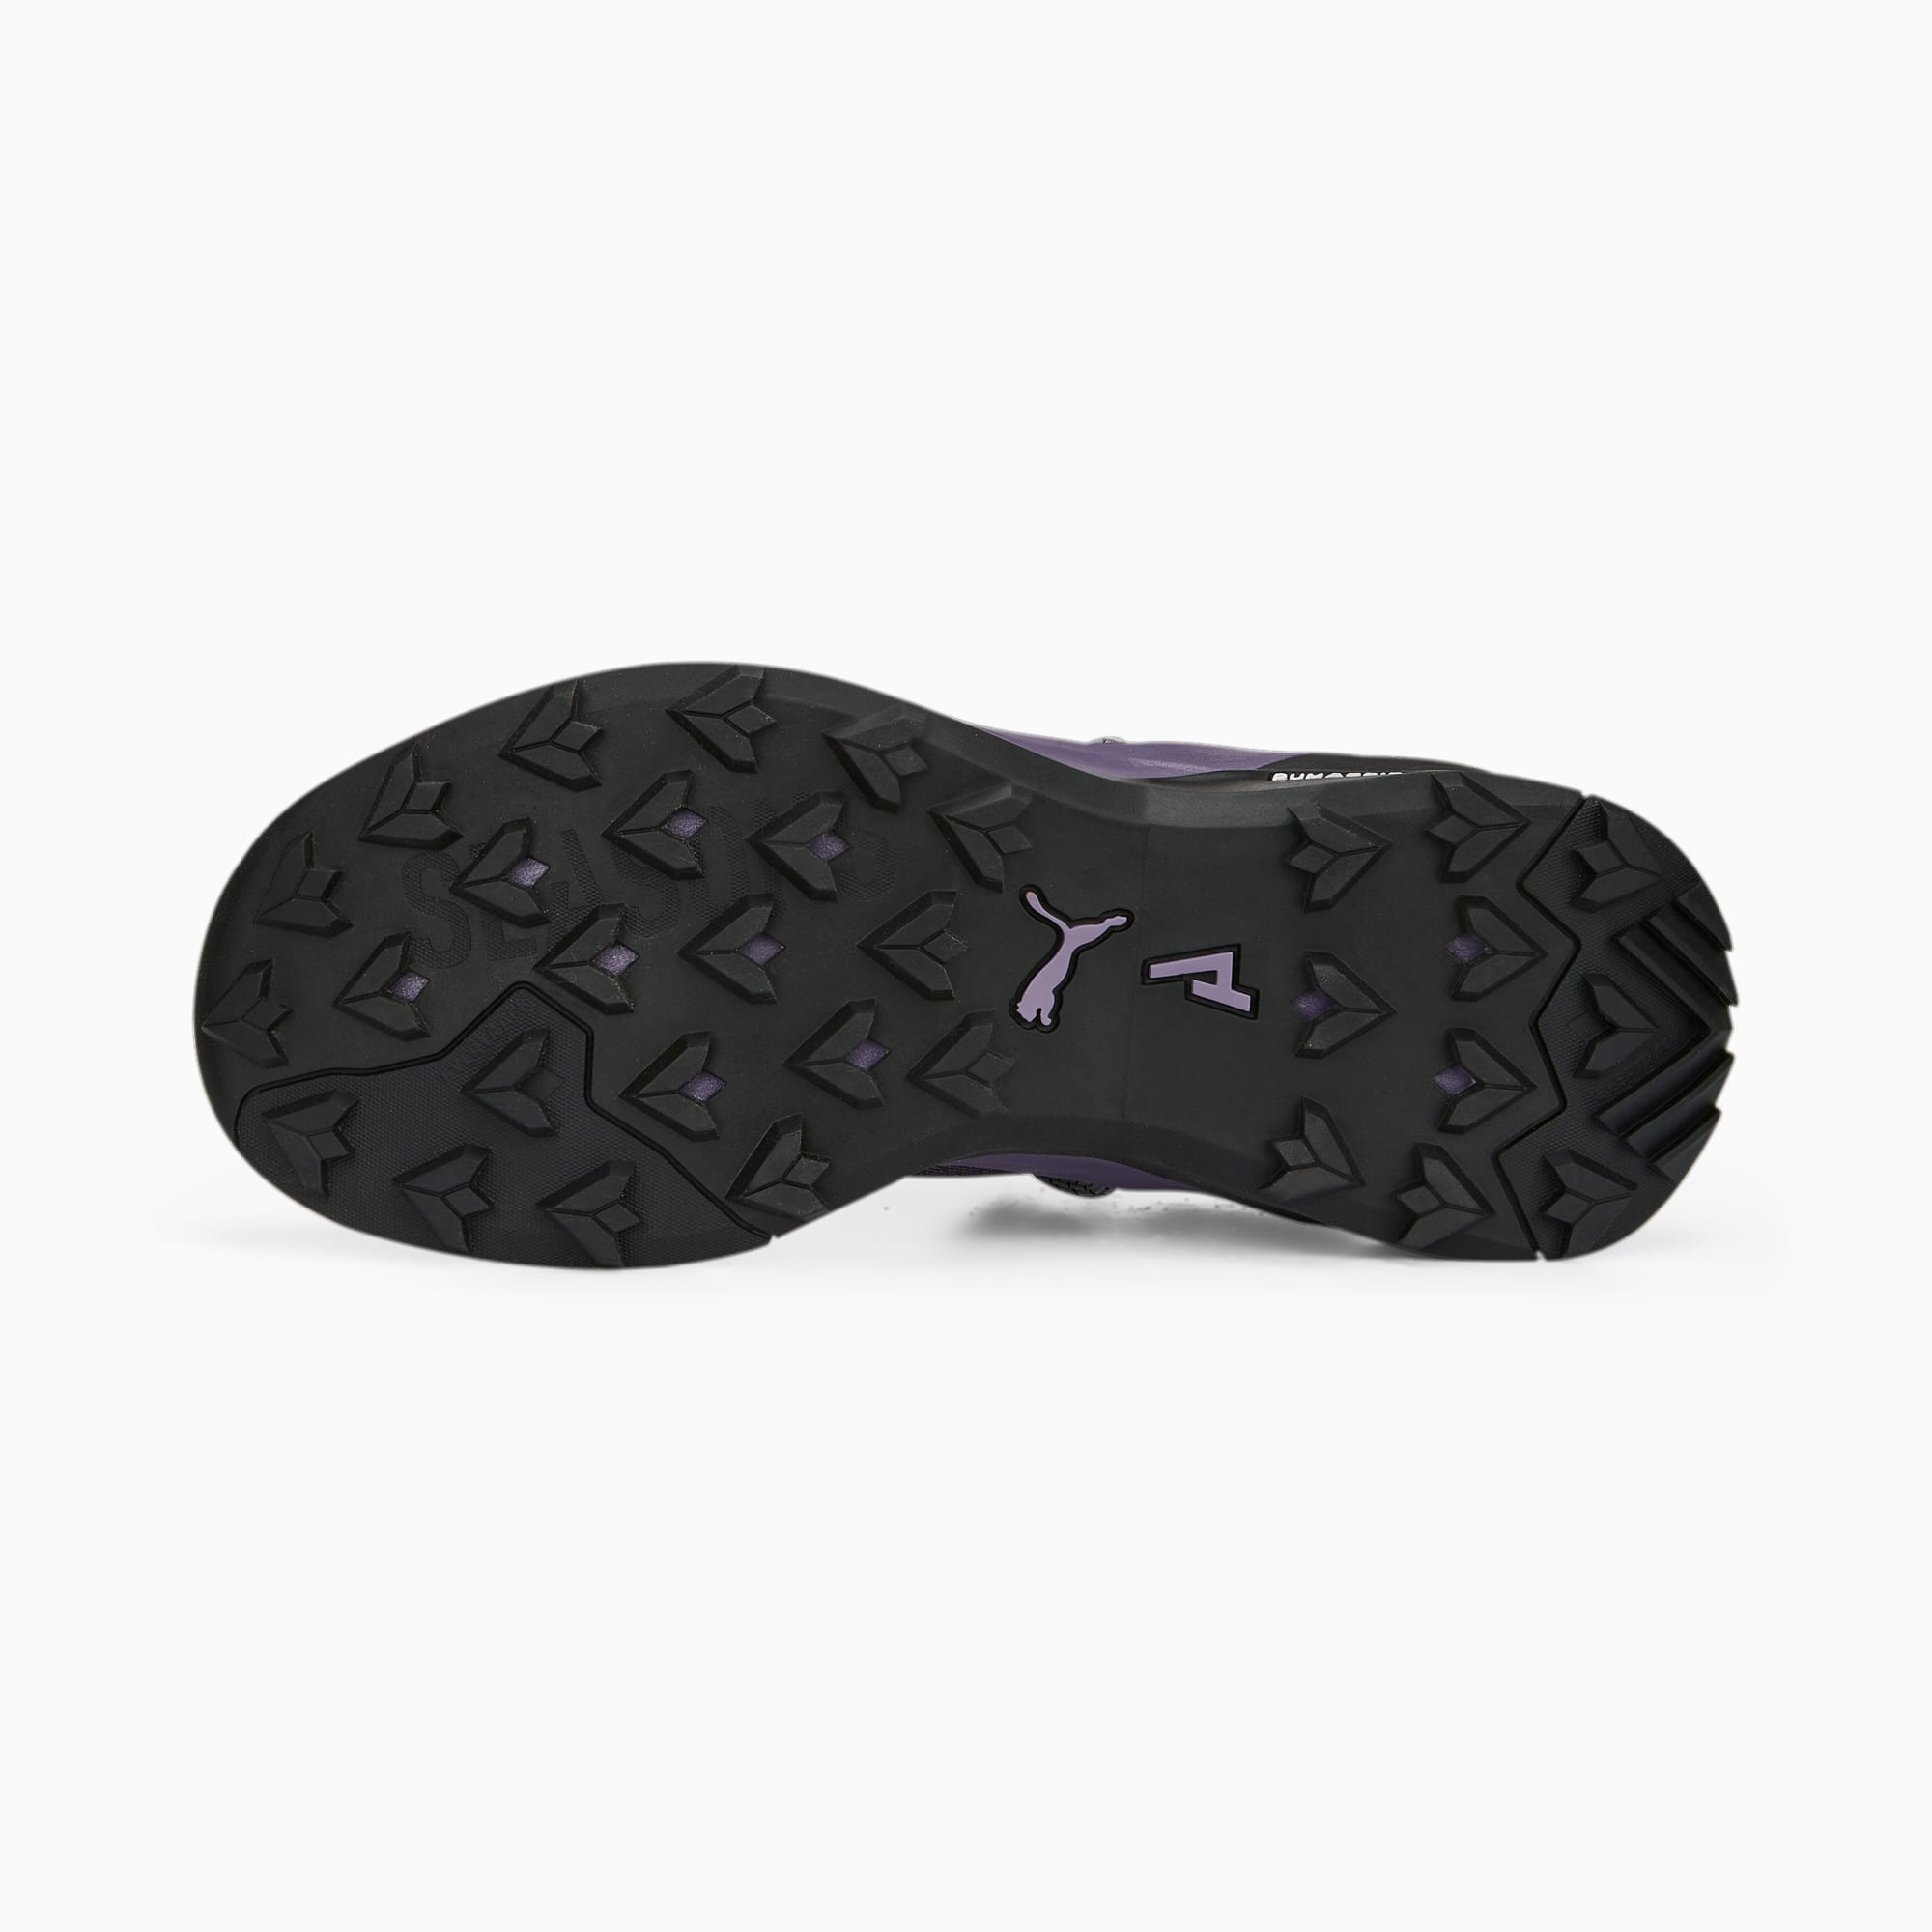 PUMA Explore Nitro™ Women's Hiking Shoes, Purple Charcoal/Black/Silver